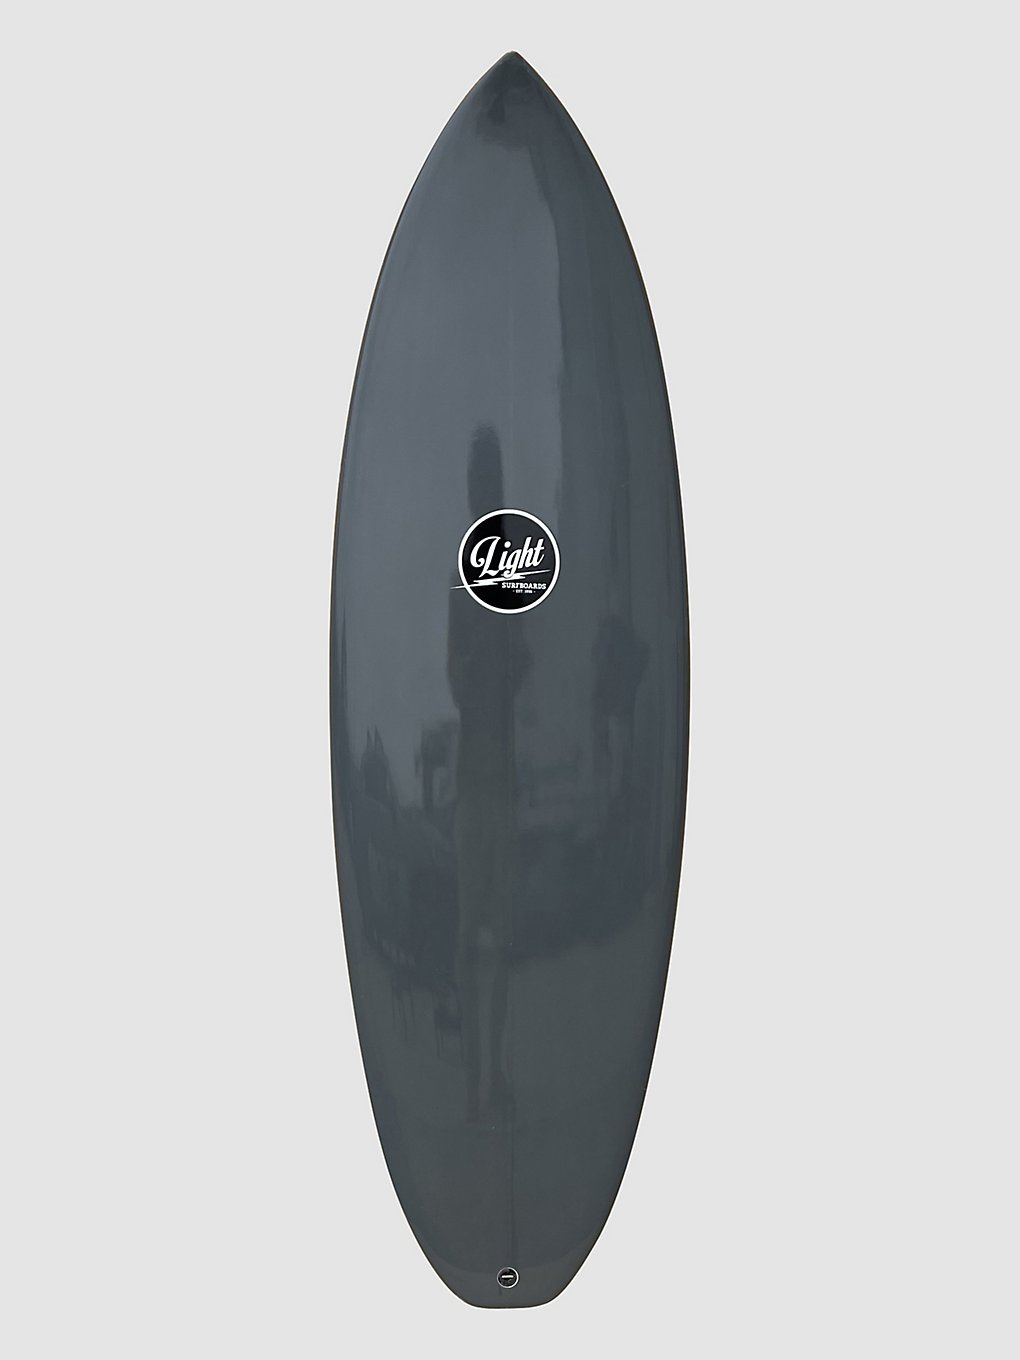 Light River Resin Grey PU Future 5'4 Surfboard patroon